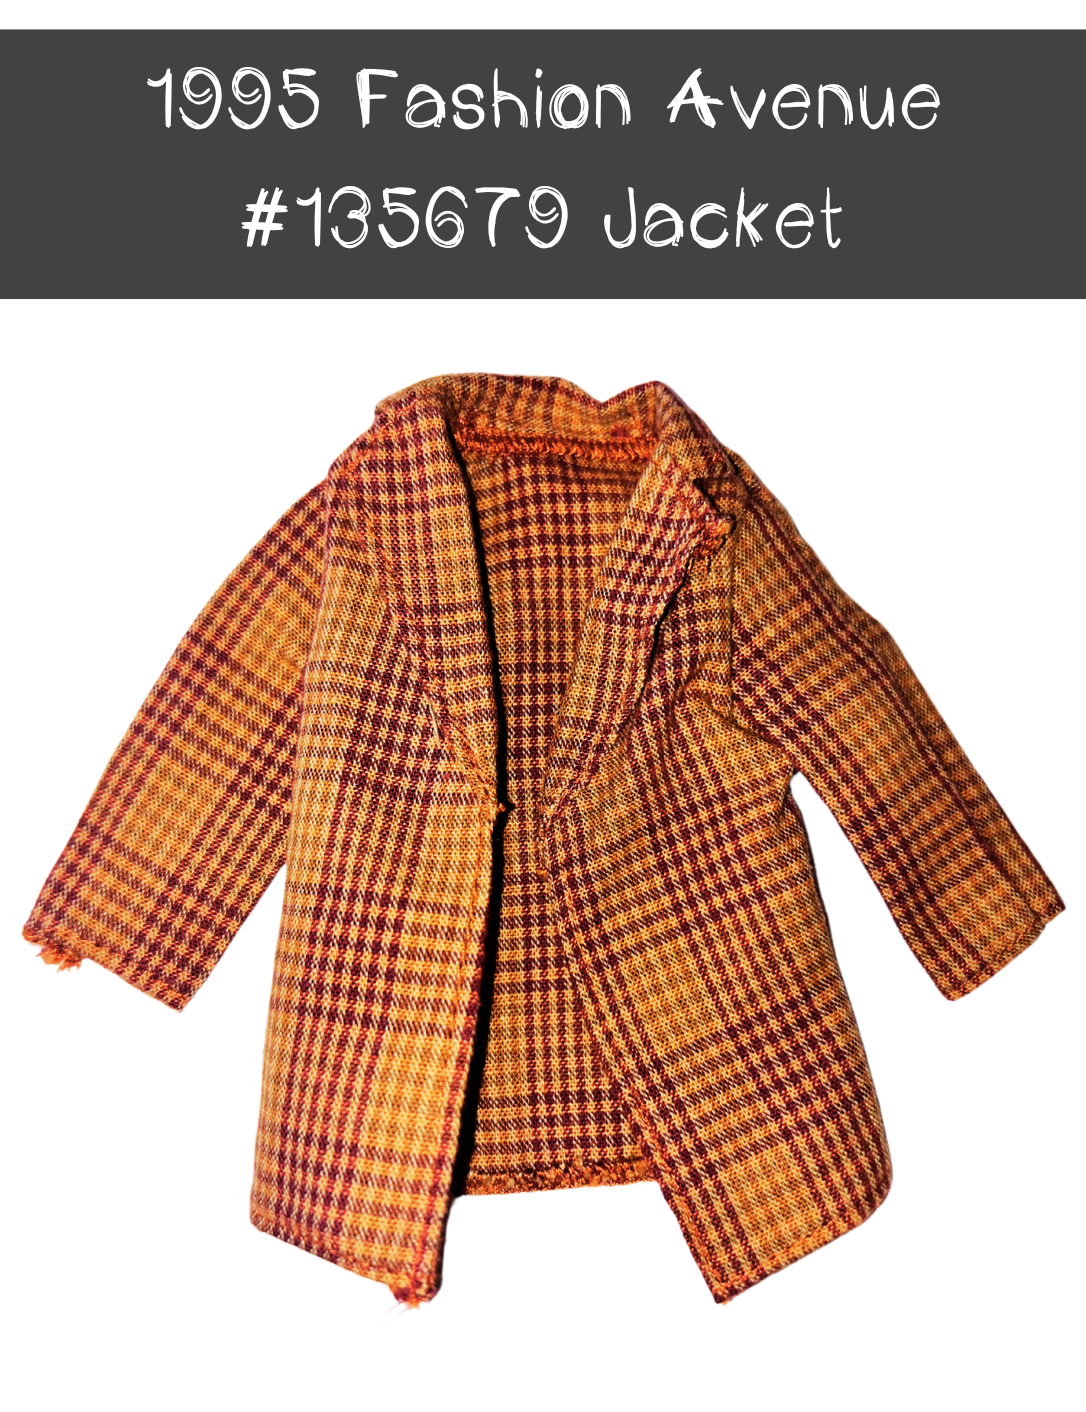 1995 Fashion Avenue #135679 Jacket